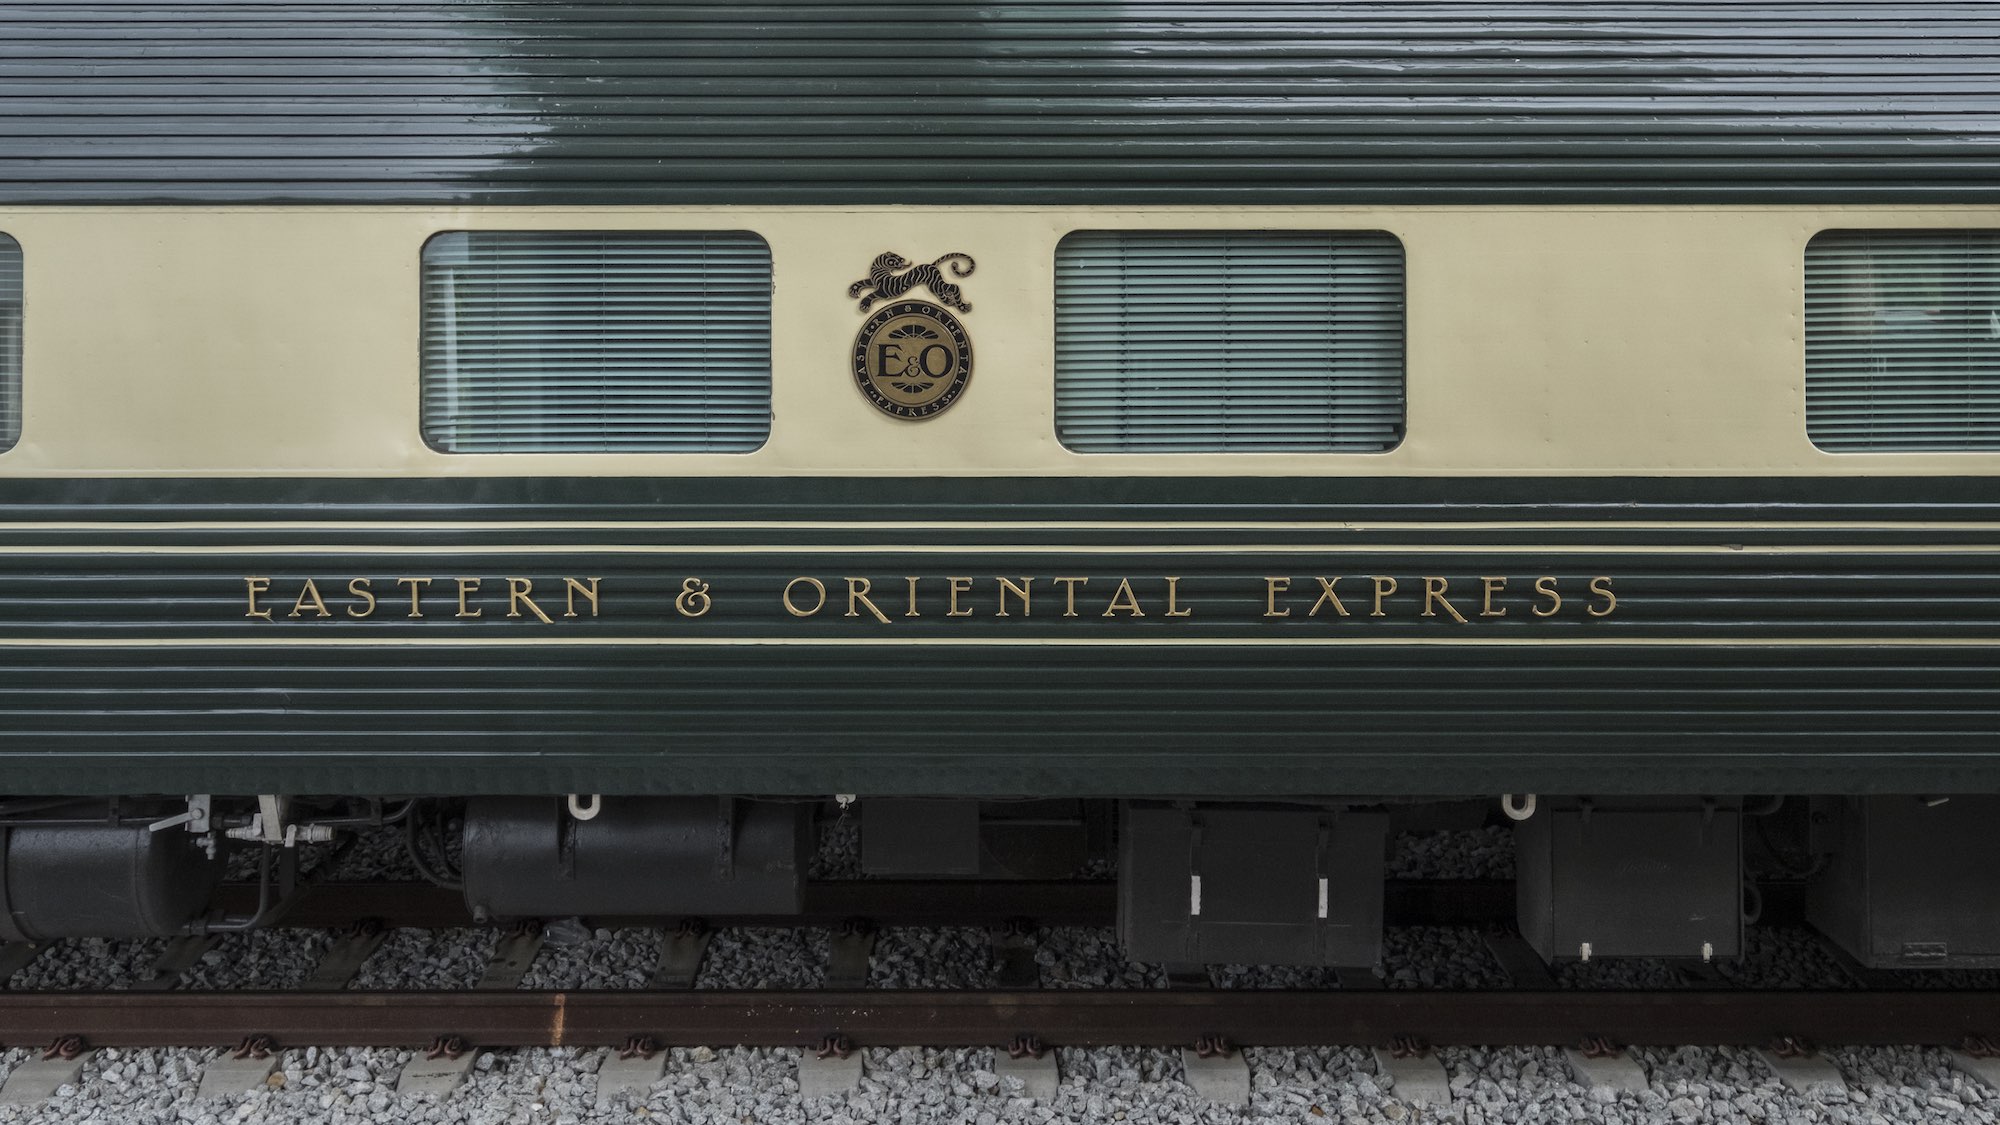 Belmond hospitality photography commercial photographer Eastern & Oriental Express train E&O 15